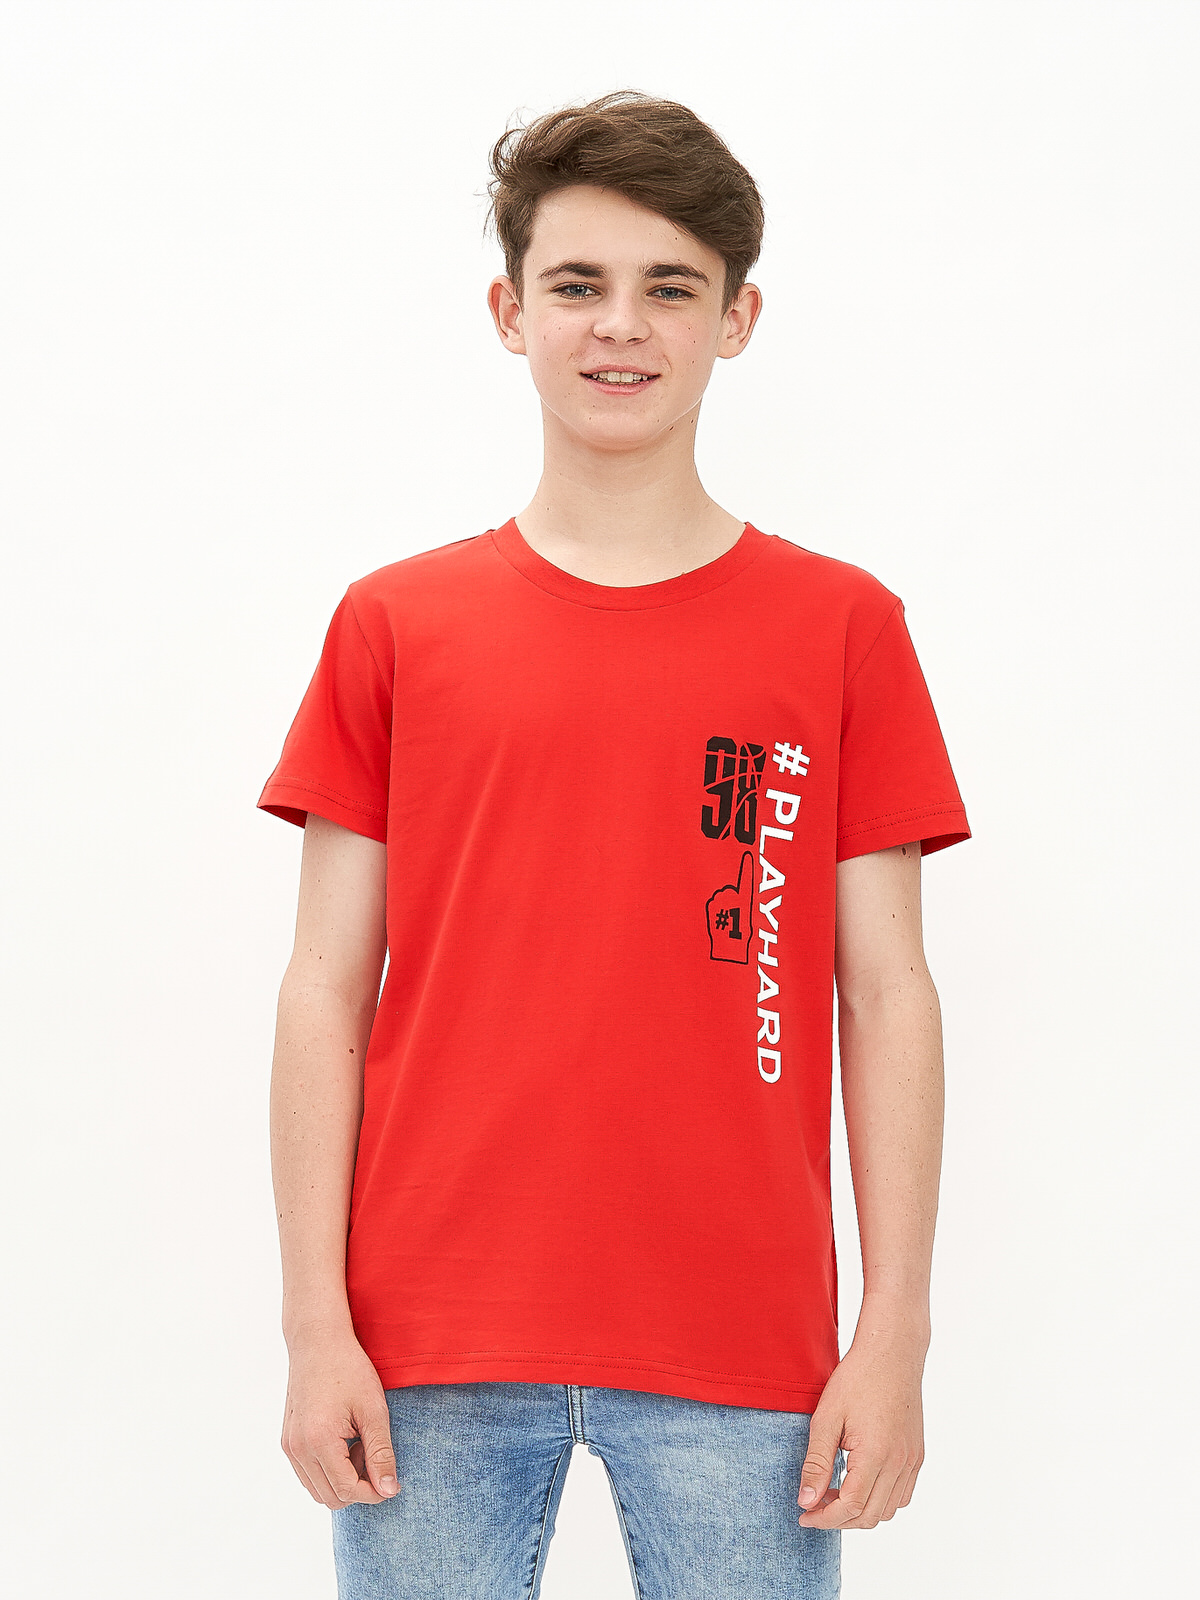 Chlapecké tričko - Winkiki WJB 11973, červená Barva: Červená, Velikost: 134